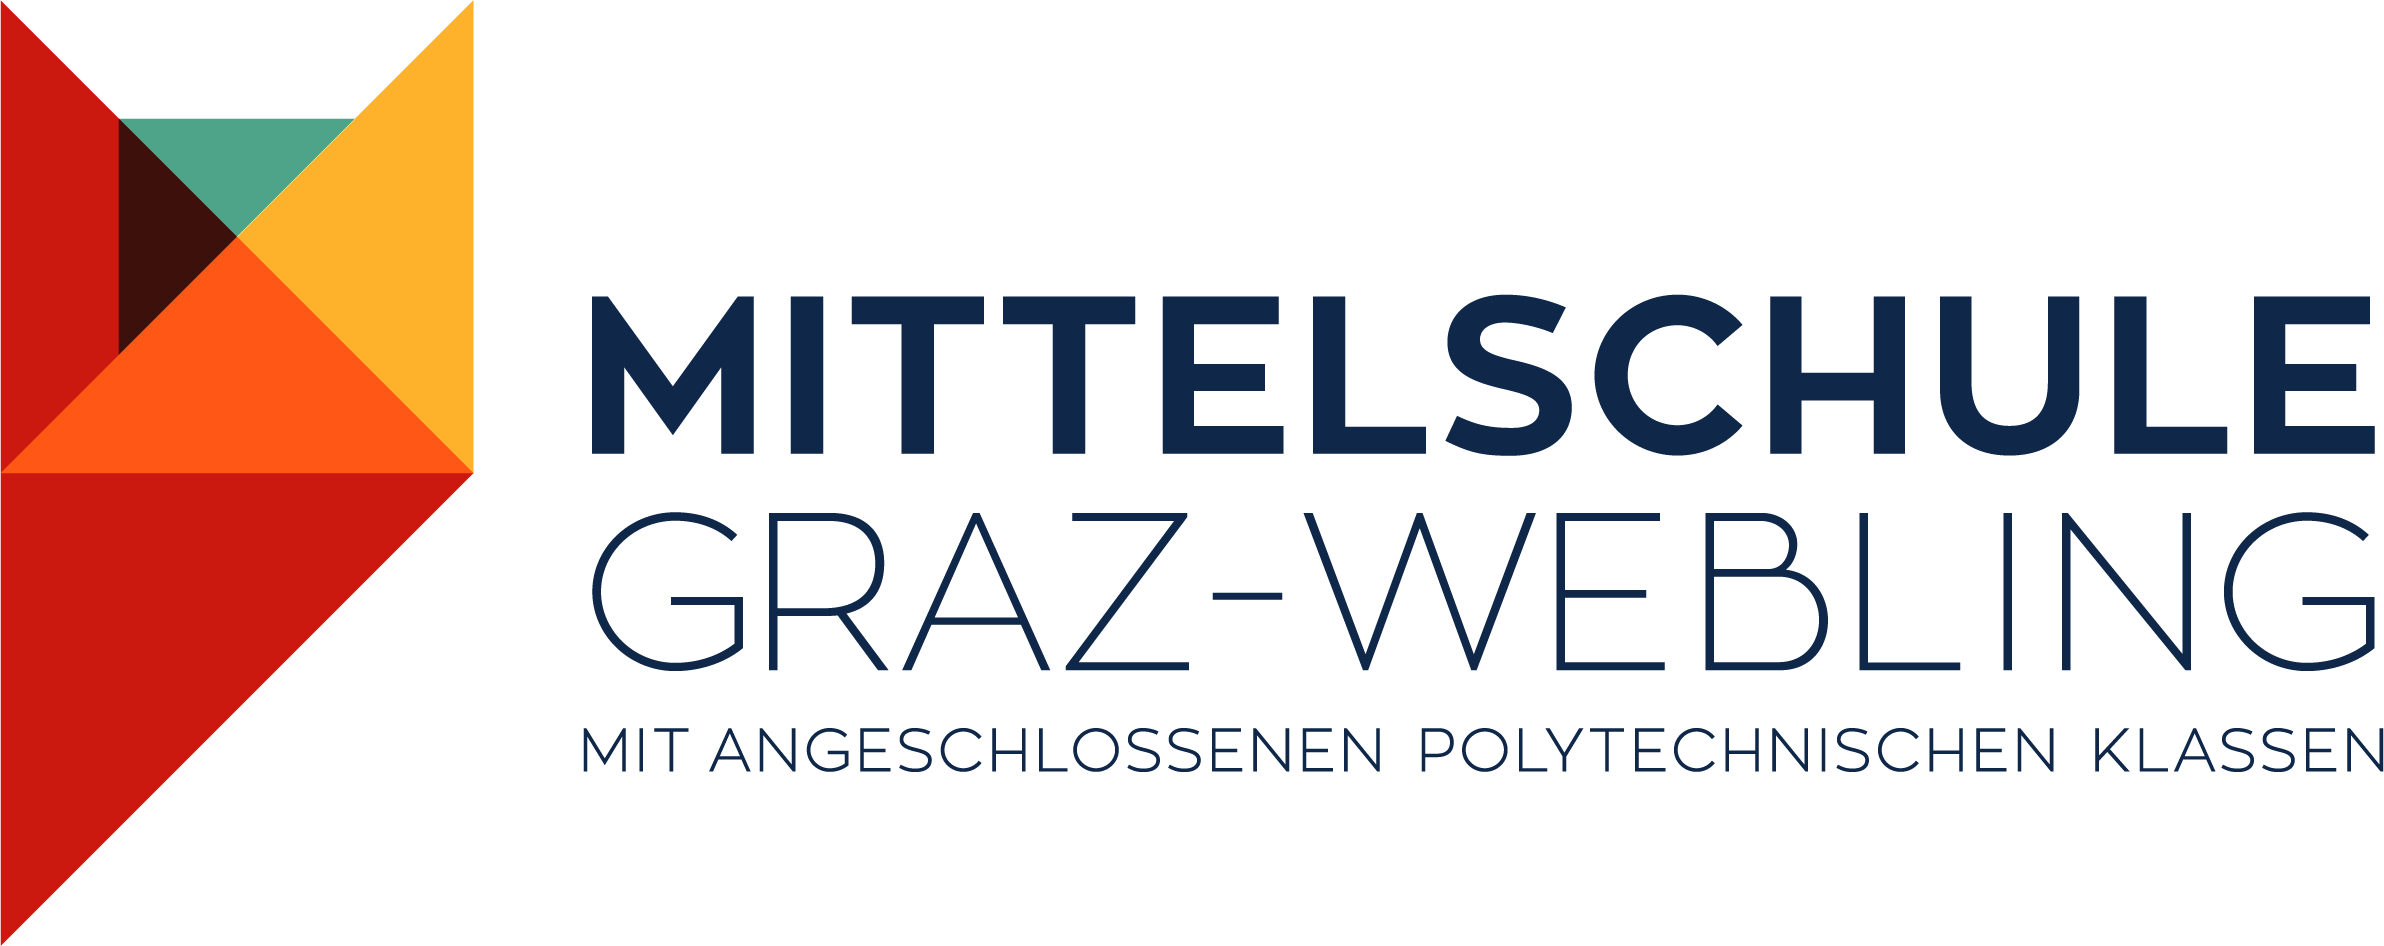 Logo der Mittelschule Graz-Webling mit angeschlossenen Polytechnischen Klassen